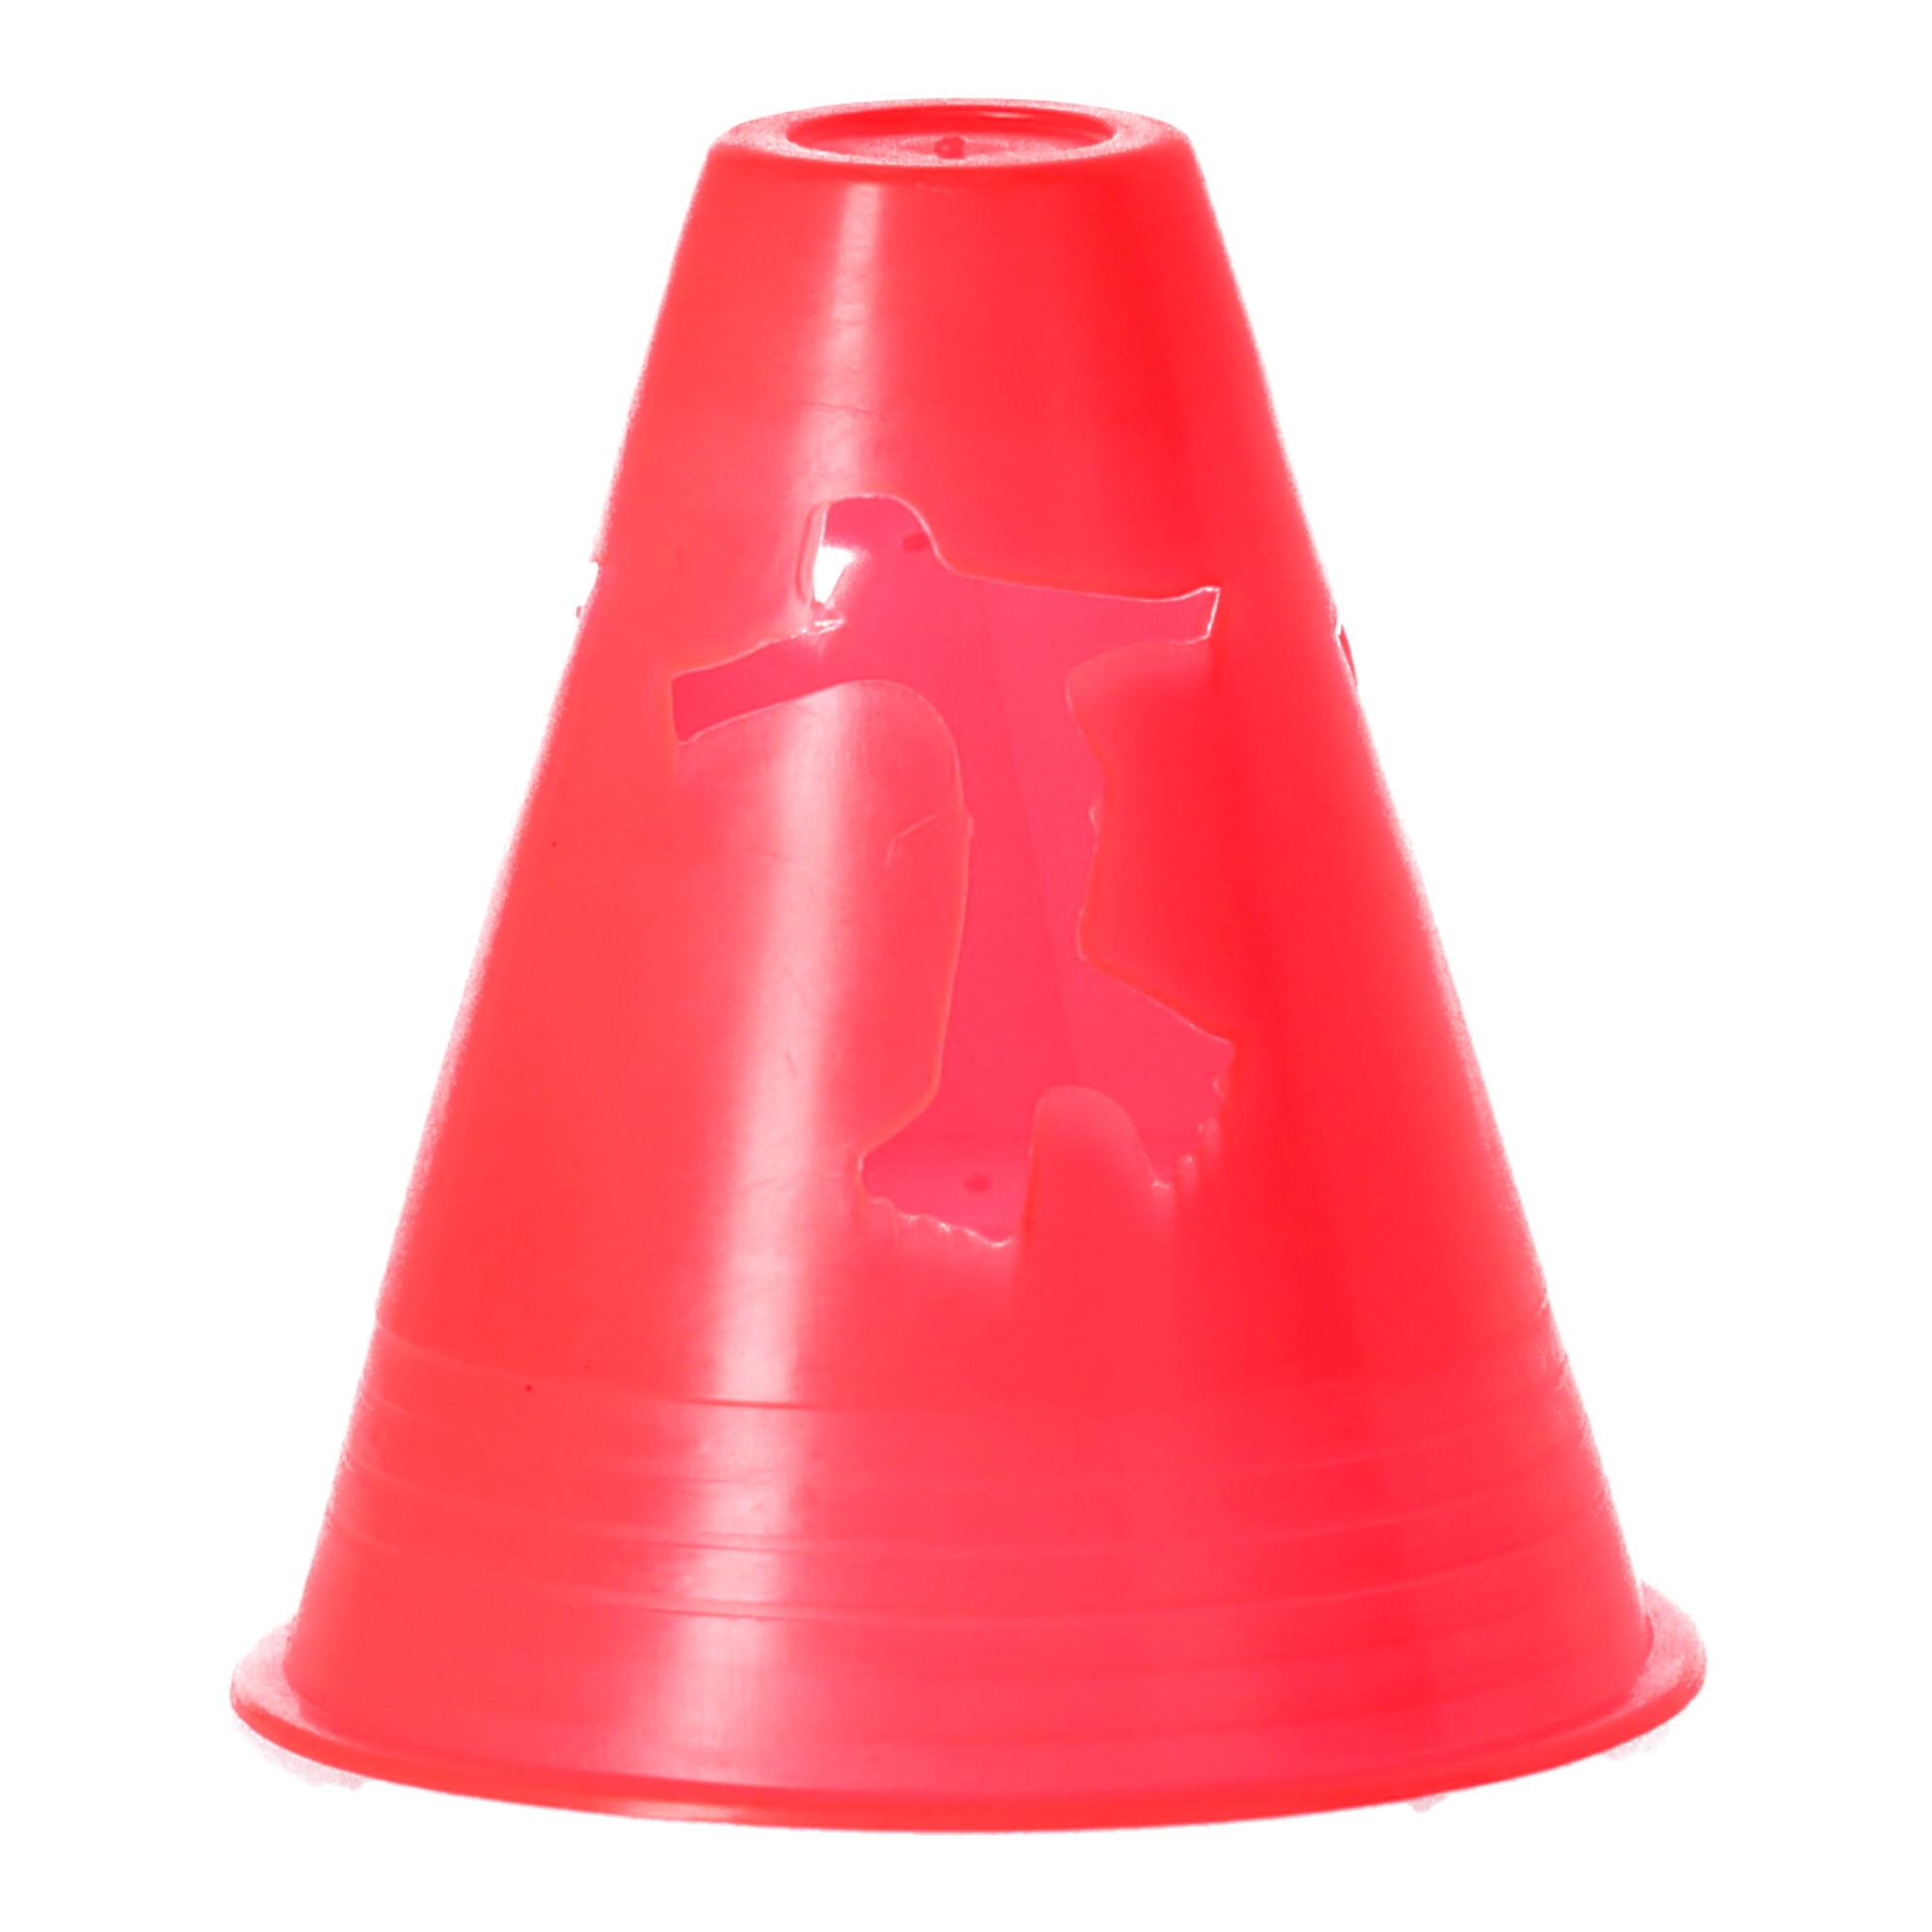 Slalom cones - red